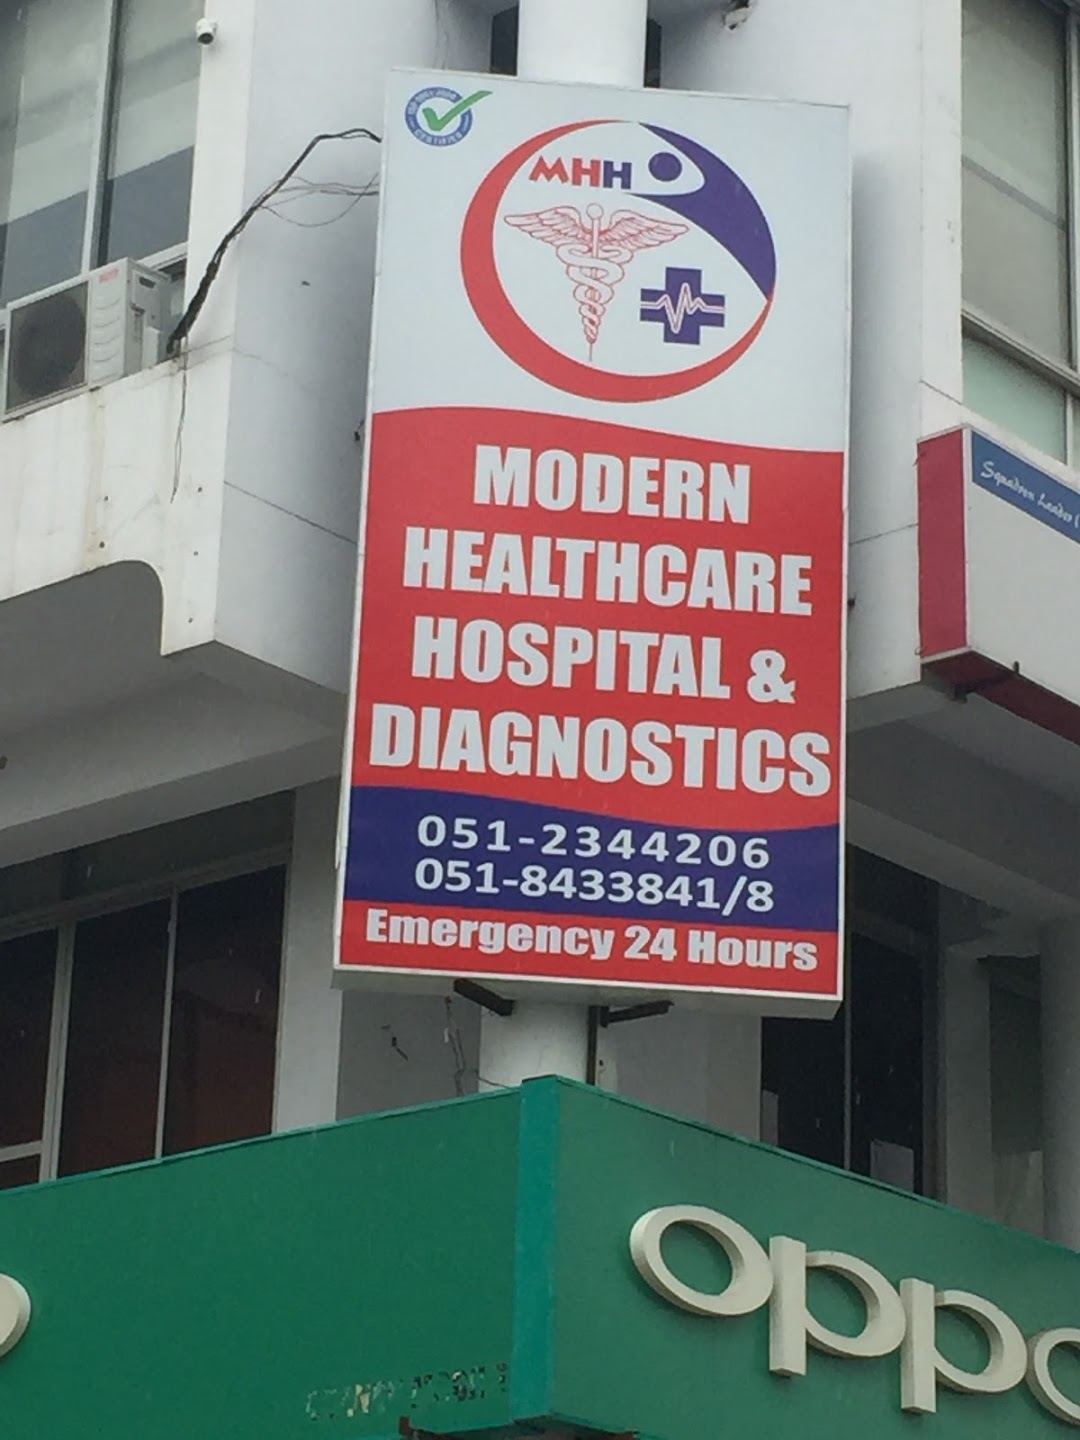 Modern healthcare hospital & diagnostic